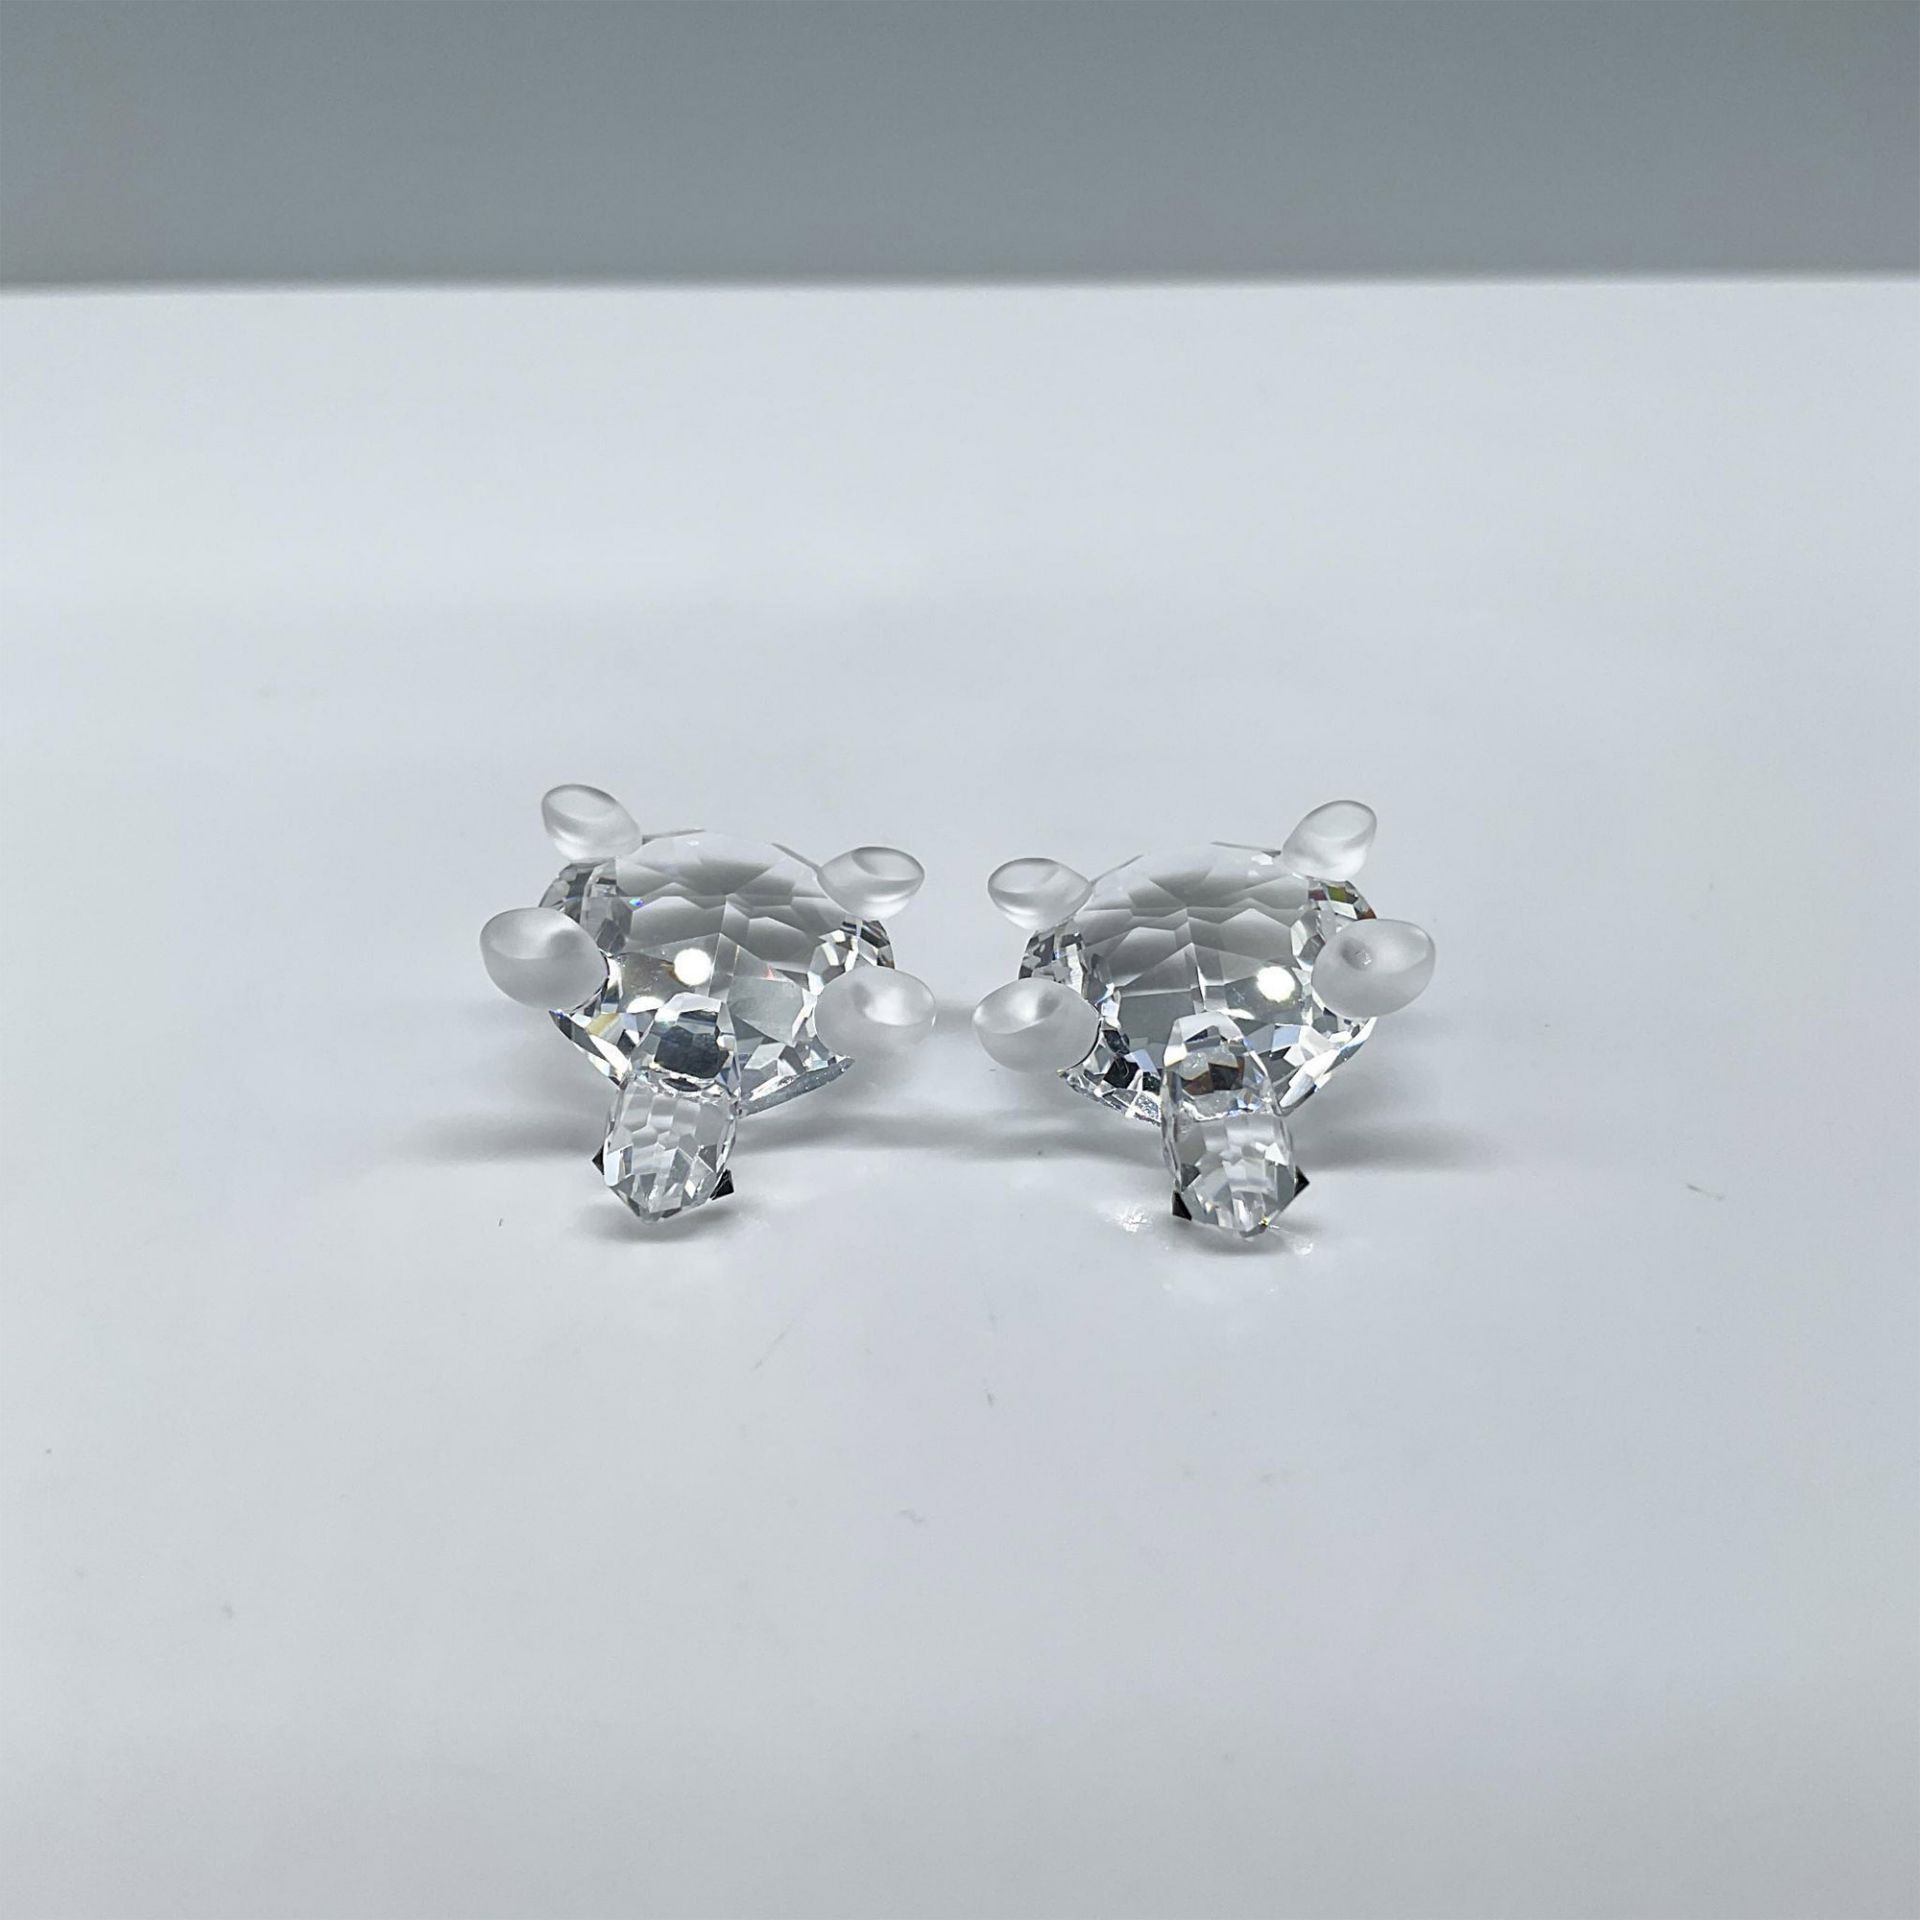 2pc Swarovski Crystal Miniatures, Baby Tortoises - Image 3 of 5